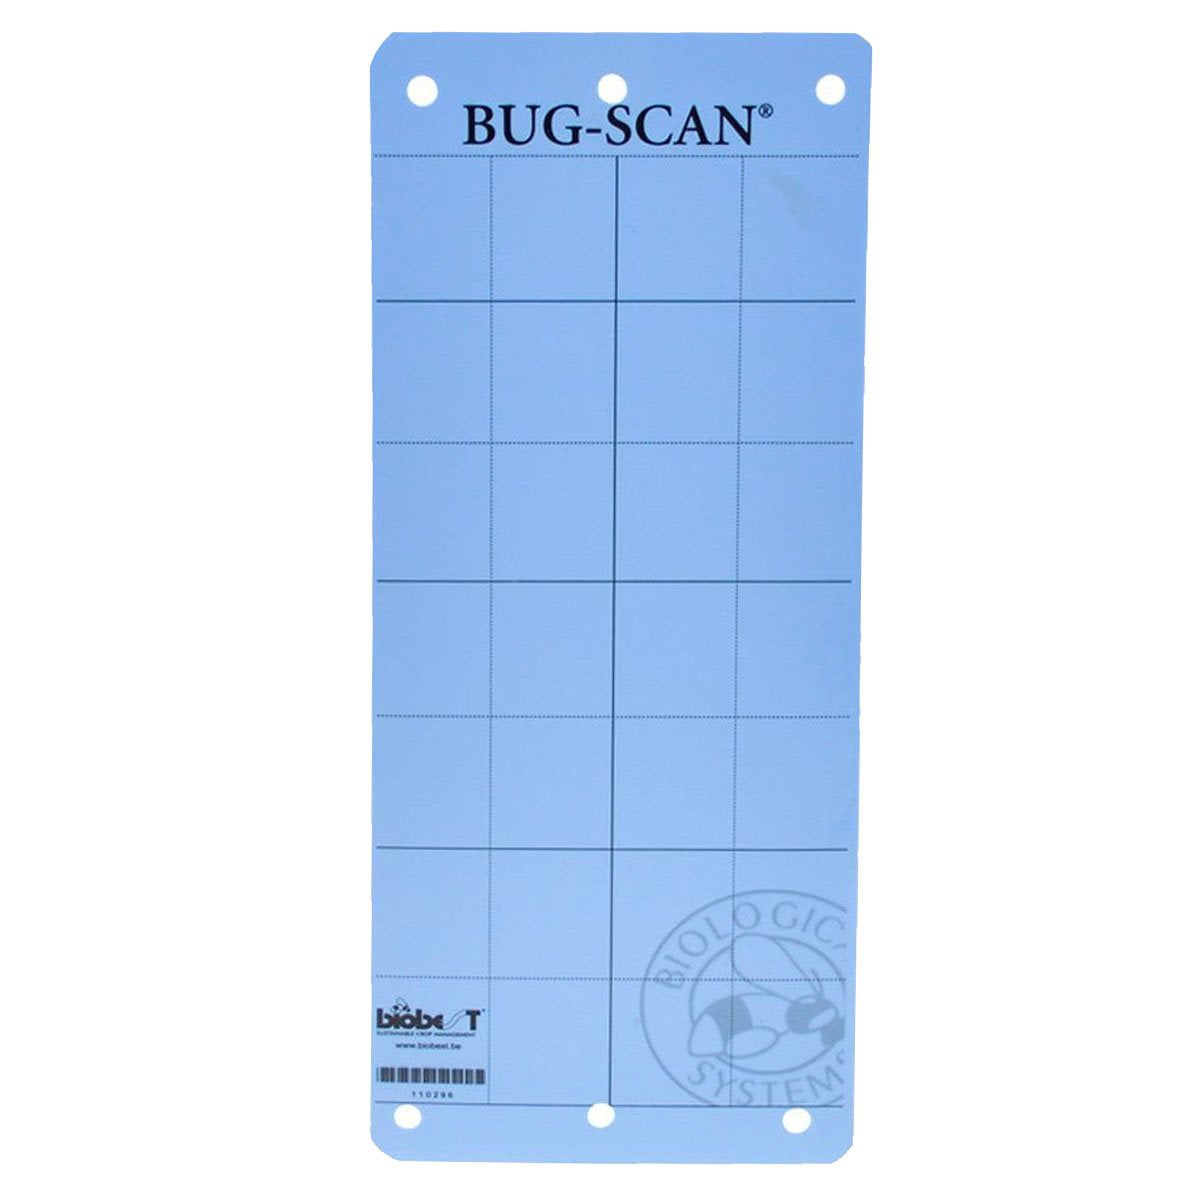 Product Image:Piège autocollant Bug-Scan bleu pour thrips / mineuses (10 / paquet)